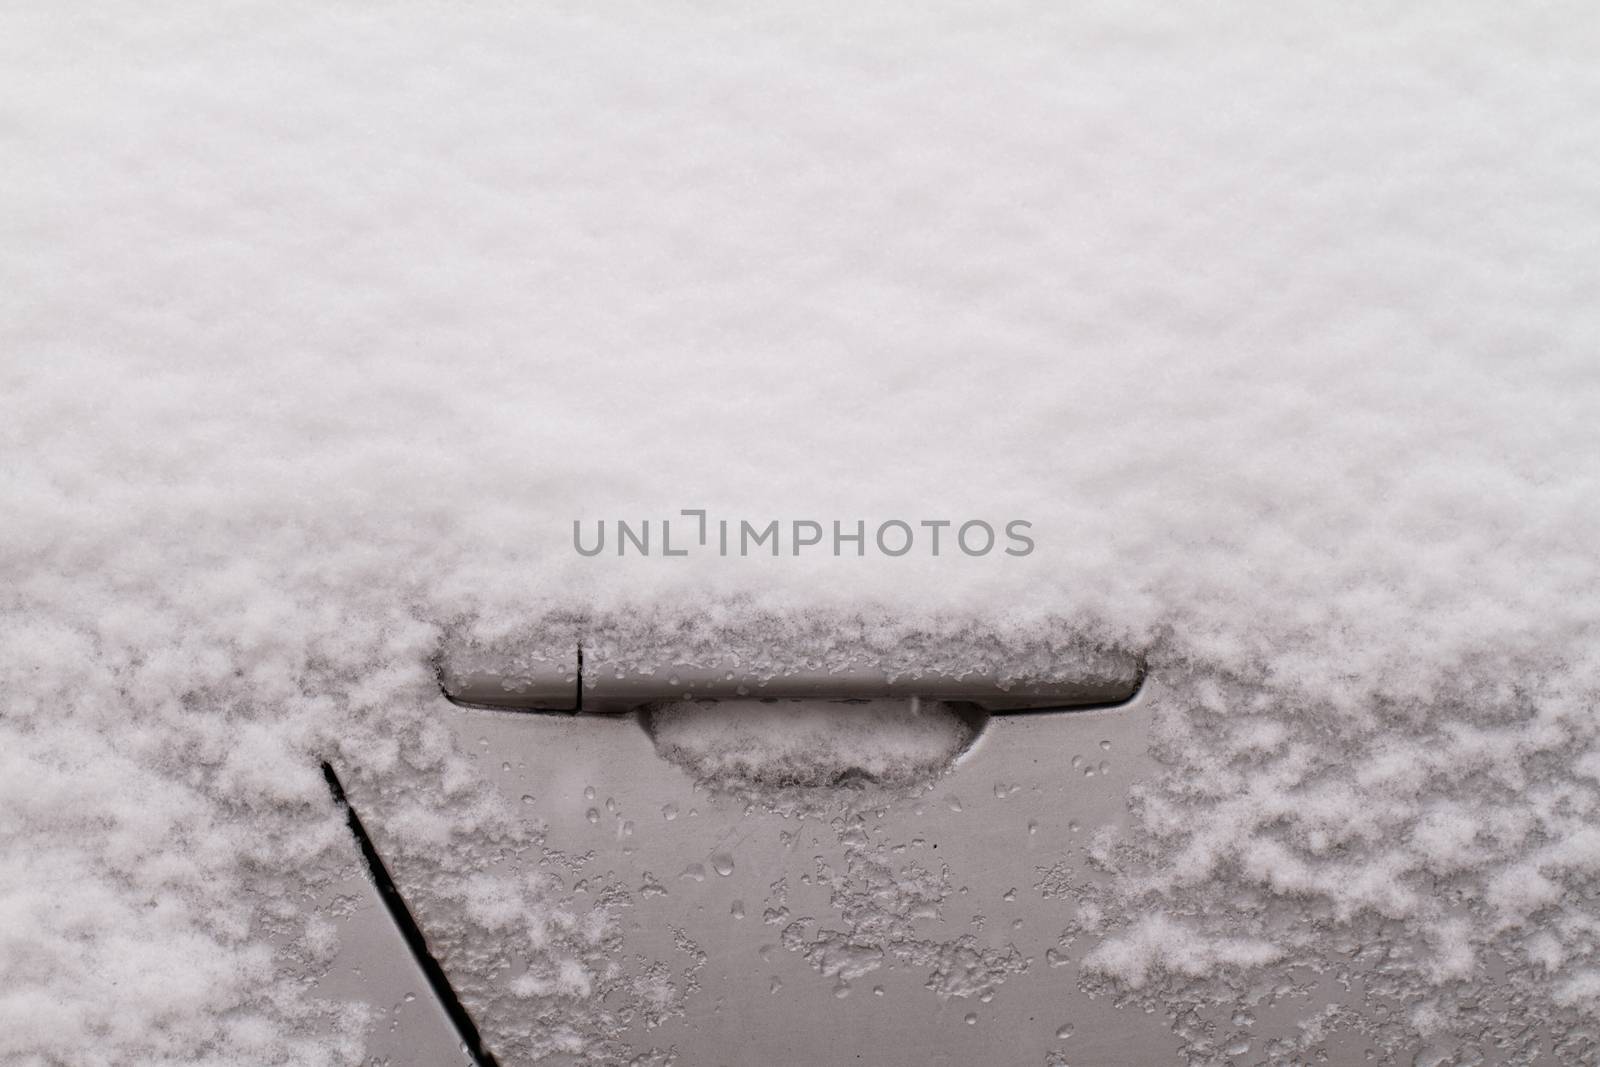 Photo of a snowy car's snowy door 